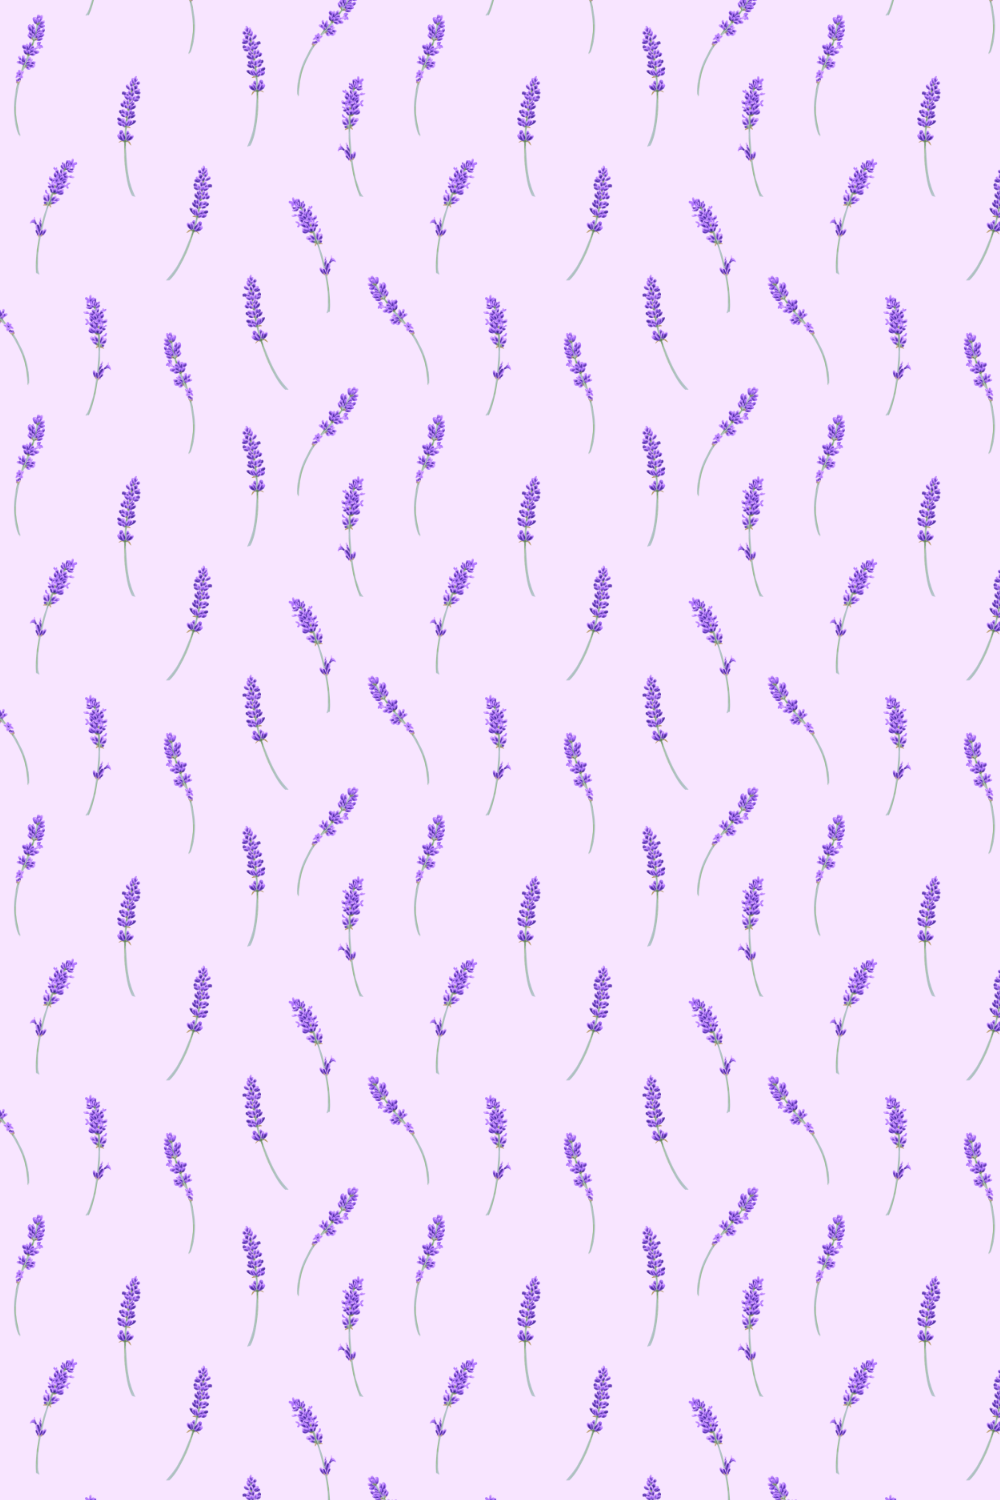 Lavender patterns pinterest preview image.